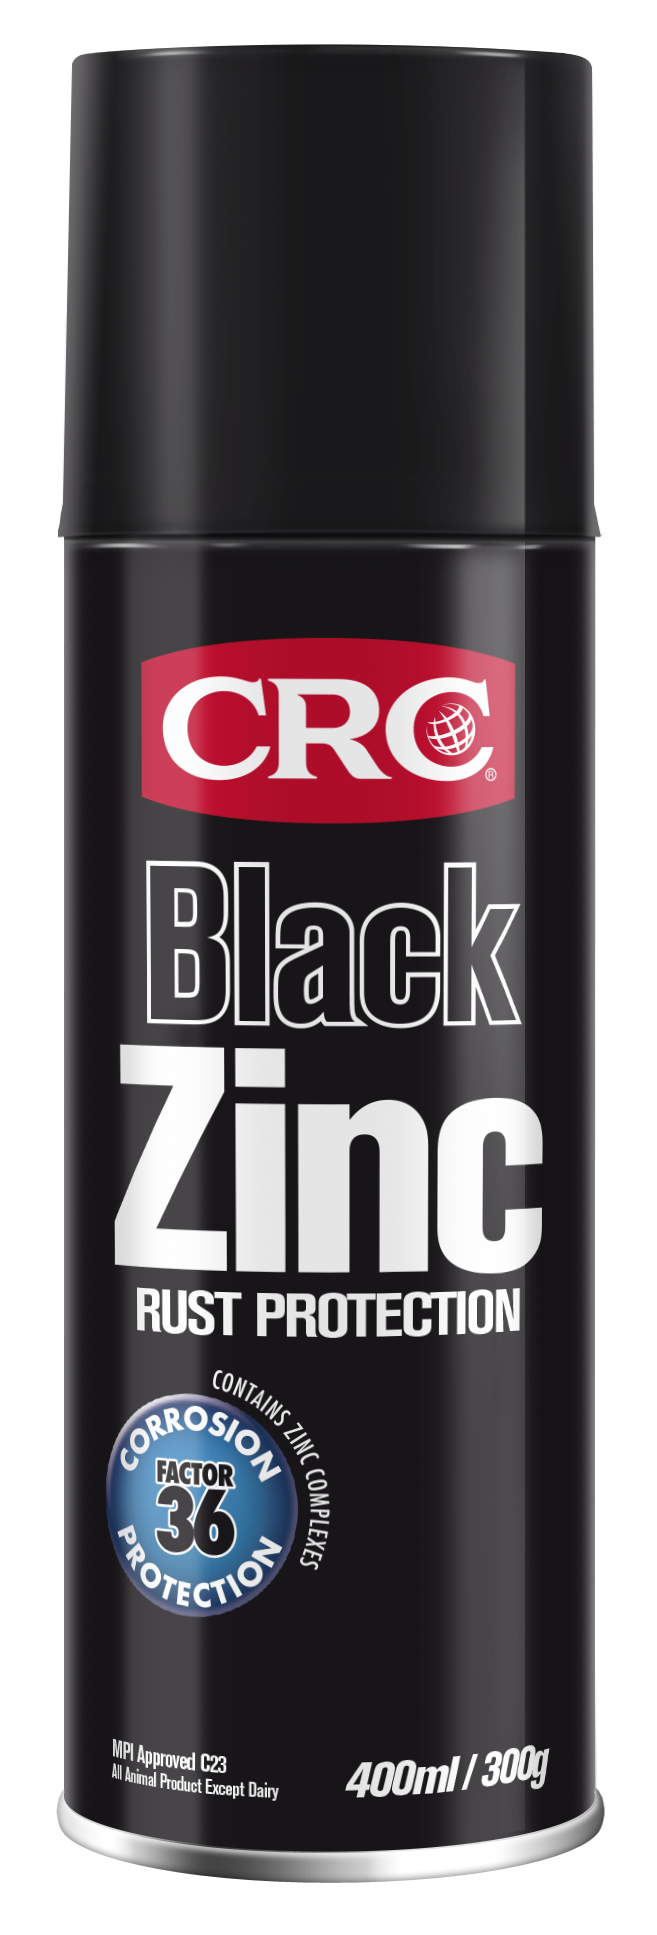 CRC Black Zinc It